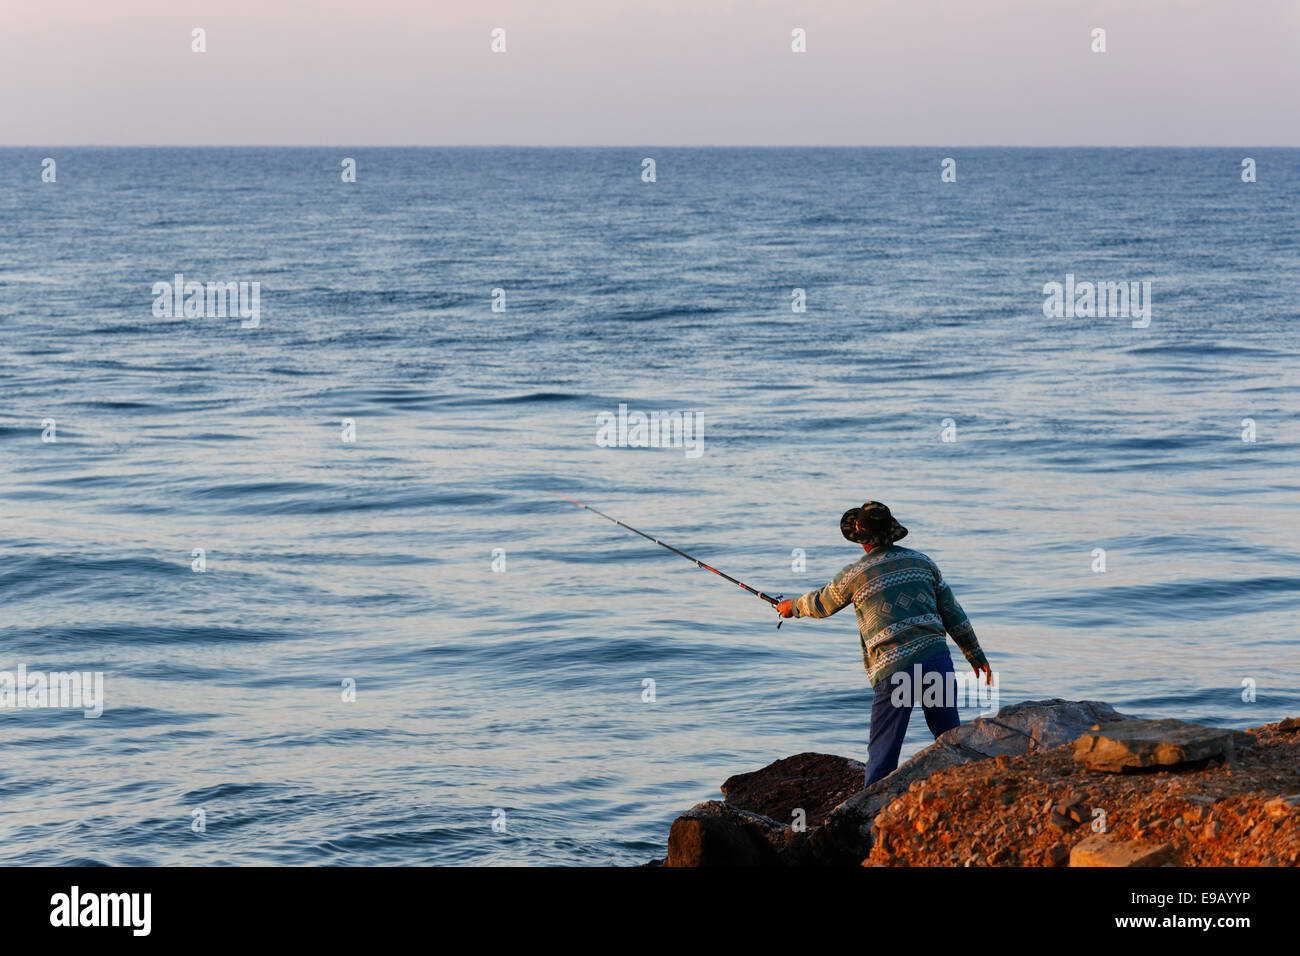 Angler, Anamur, Mersin Province, Turkish Riviera, Turkey Stock Photo